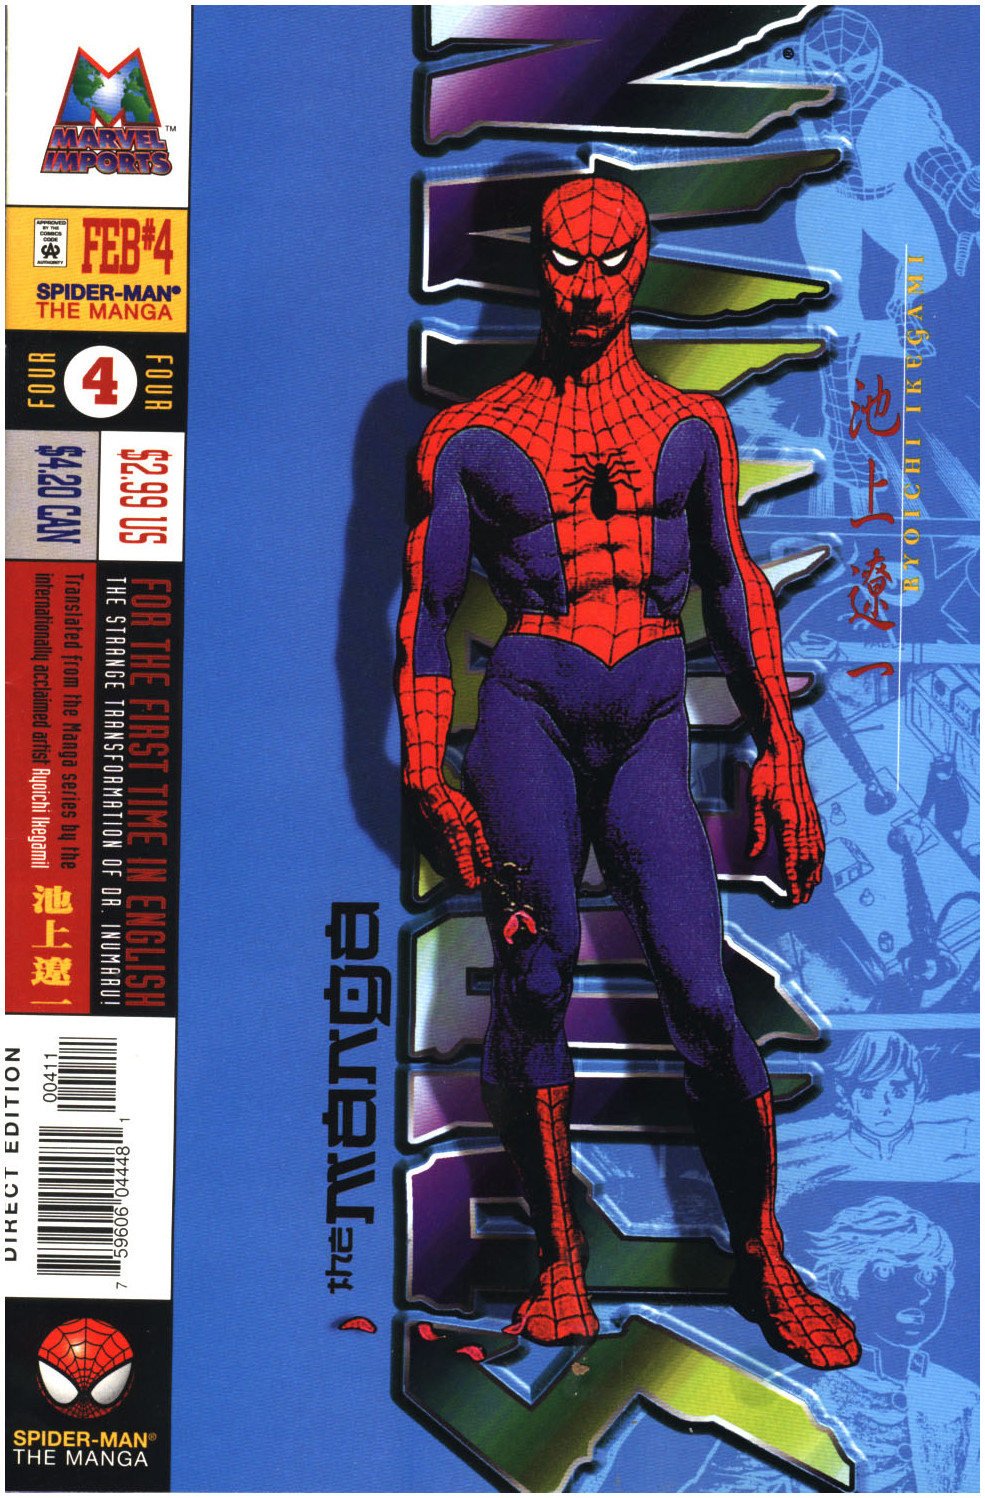 Spider-Man: The Manga Vol 1 4 | Marvel Database | Fandom